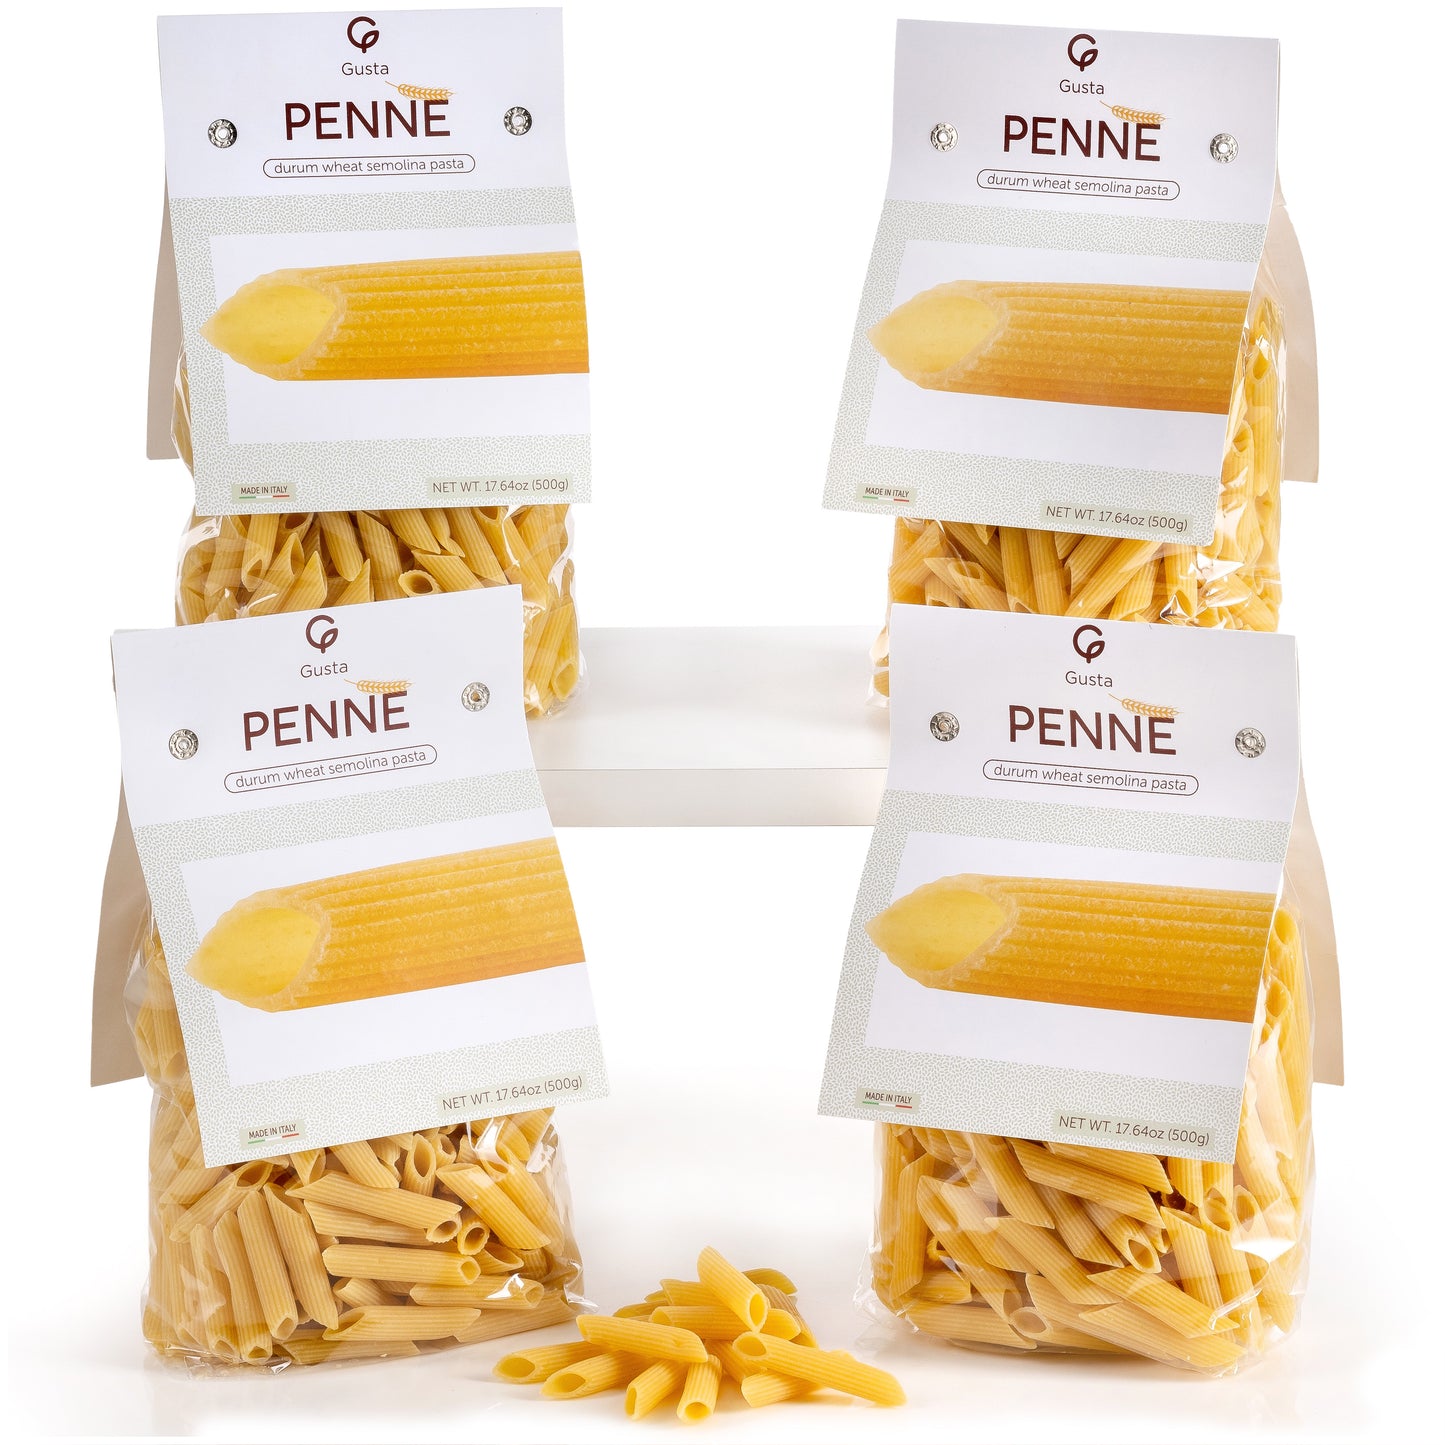 Gusta Penne Pasta - USDA Organic - Non-GMO Durum Wheat Semolina